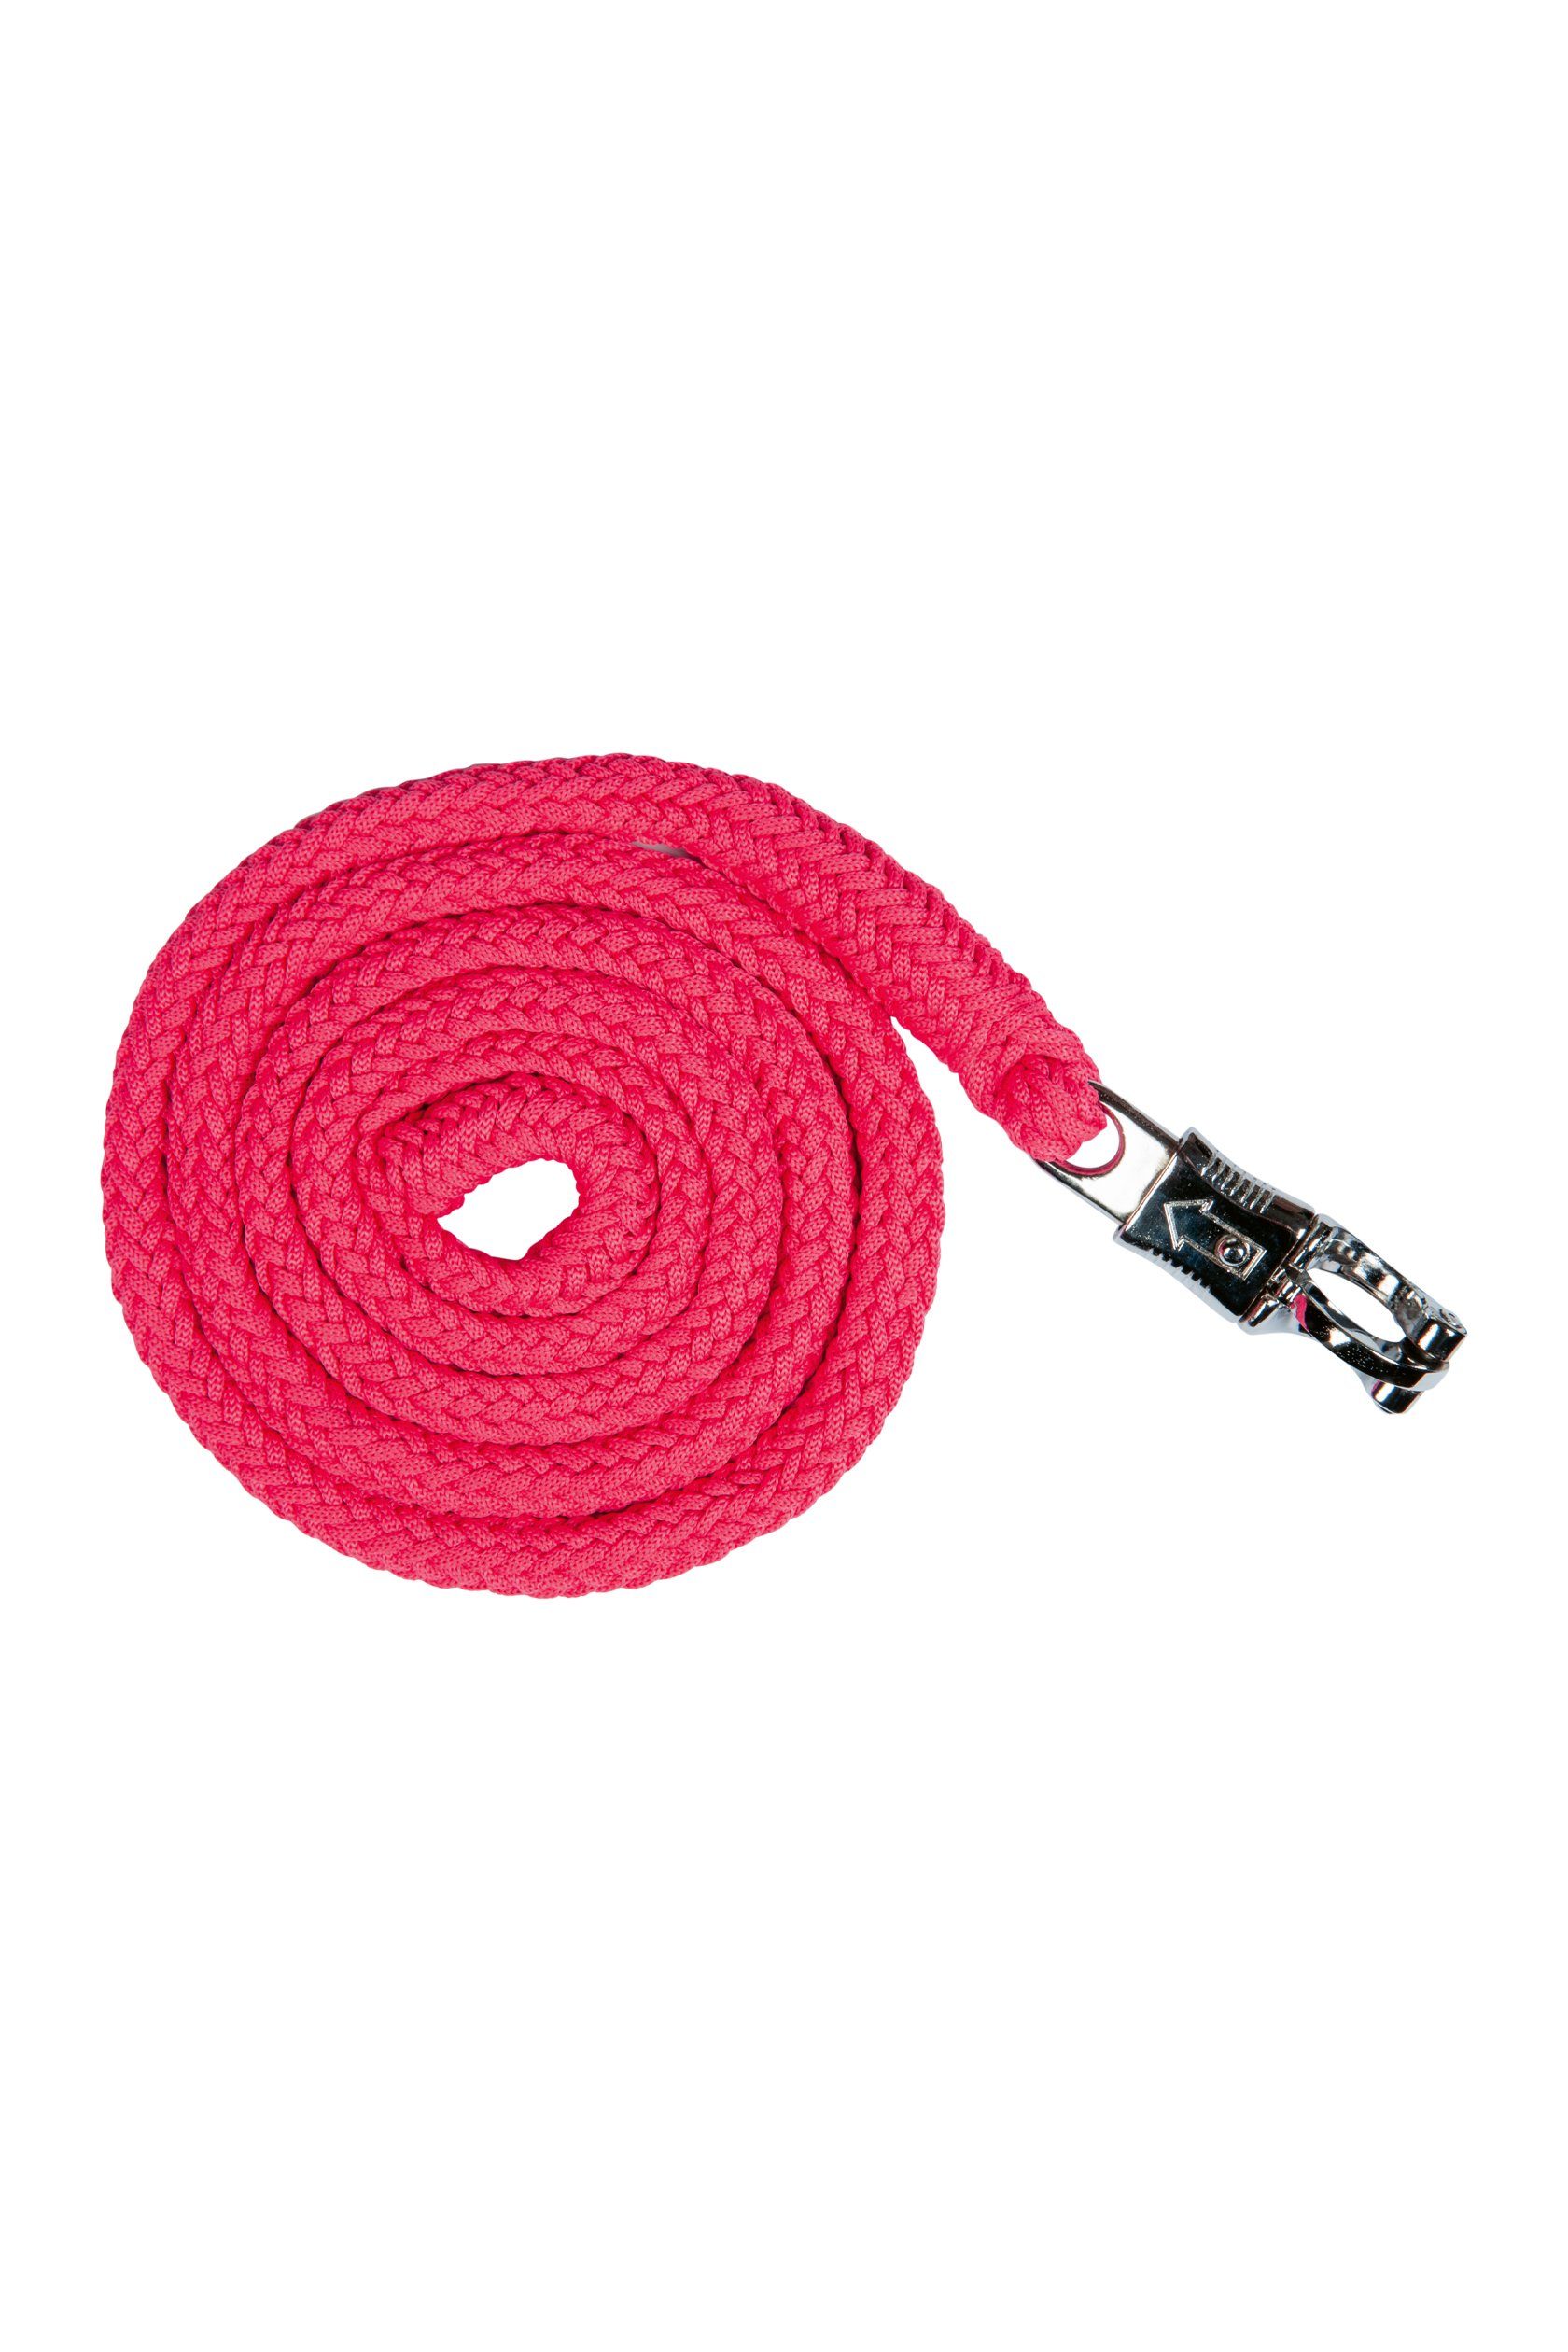 HKM Führstrick Strick -Stars Softice- (8045) 100% Polyester neon mit Panikhaken, pink